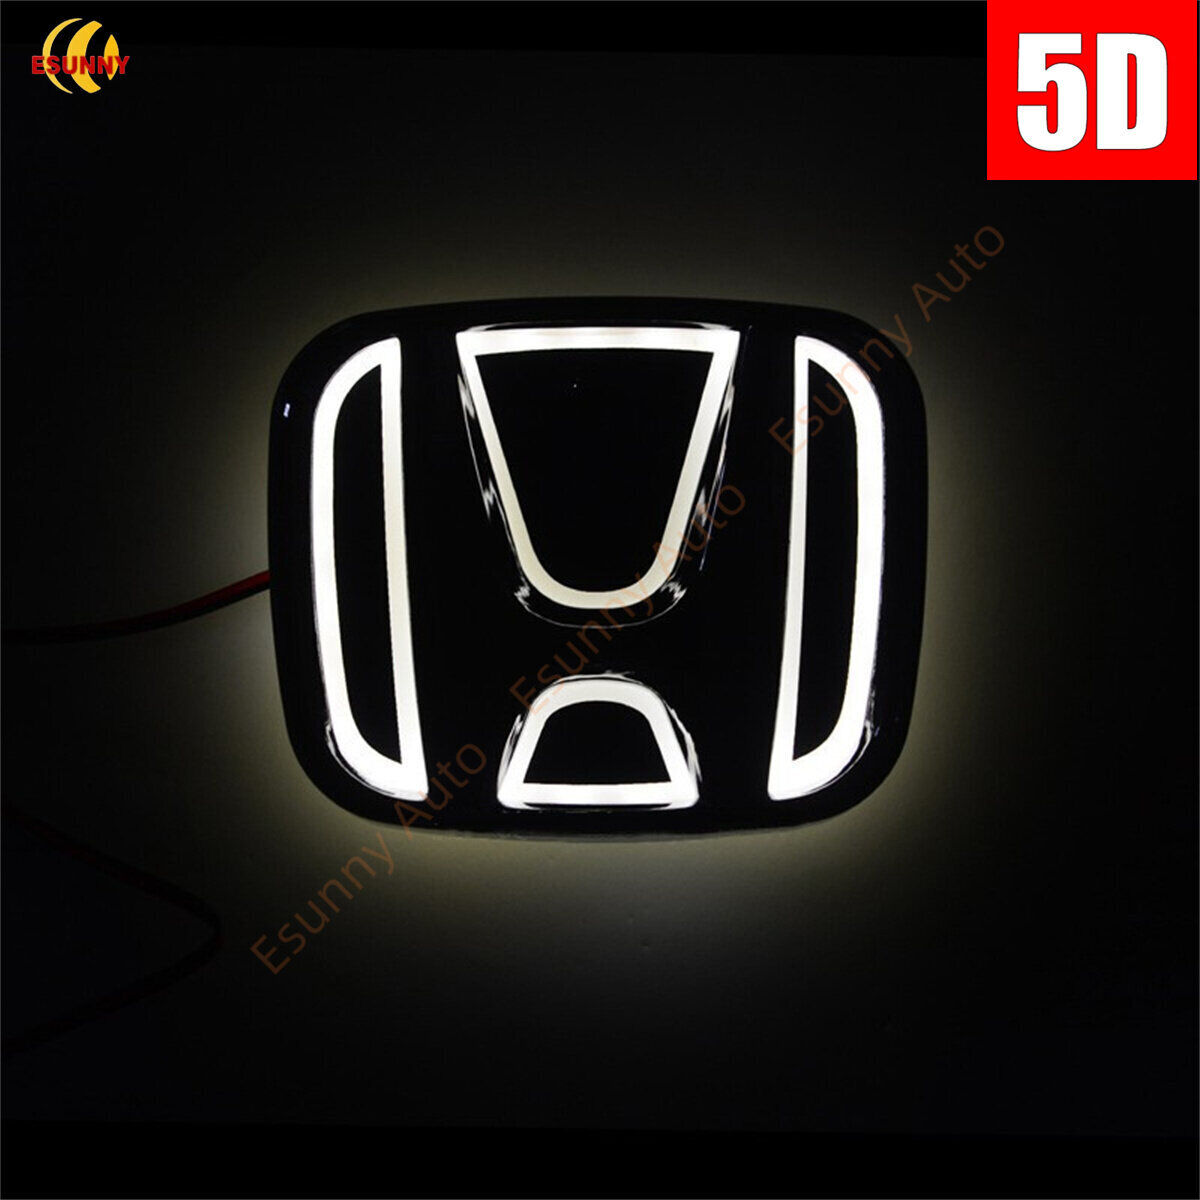 5D LED Emblem Badge Car Front or Rear Replaced for Civic City Odyssey Vezel